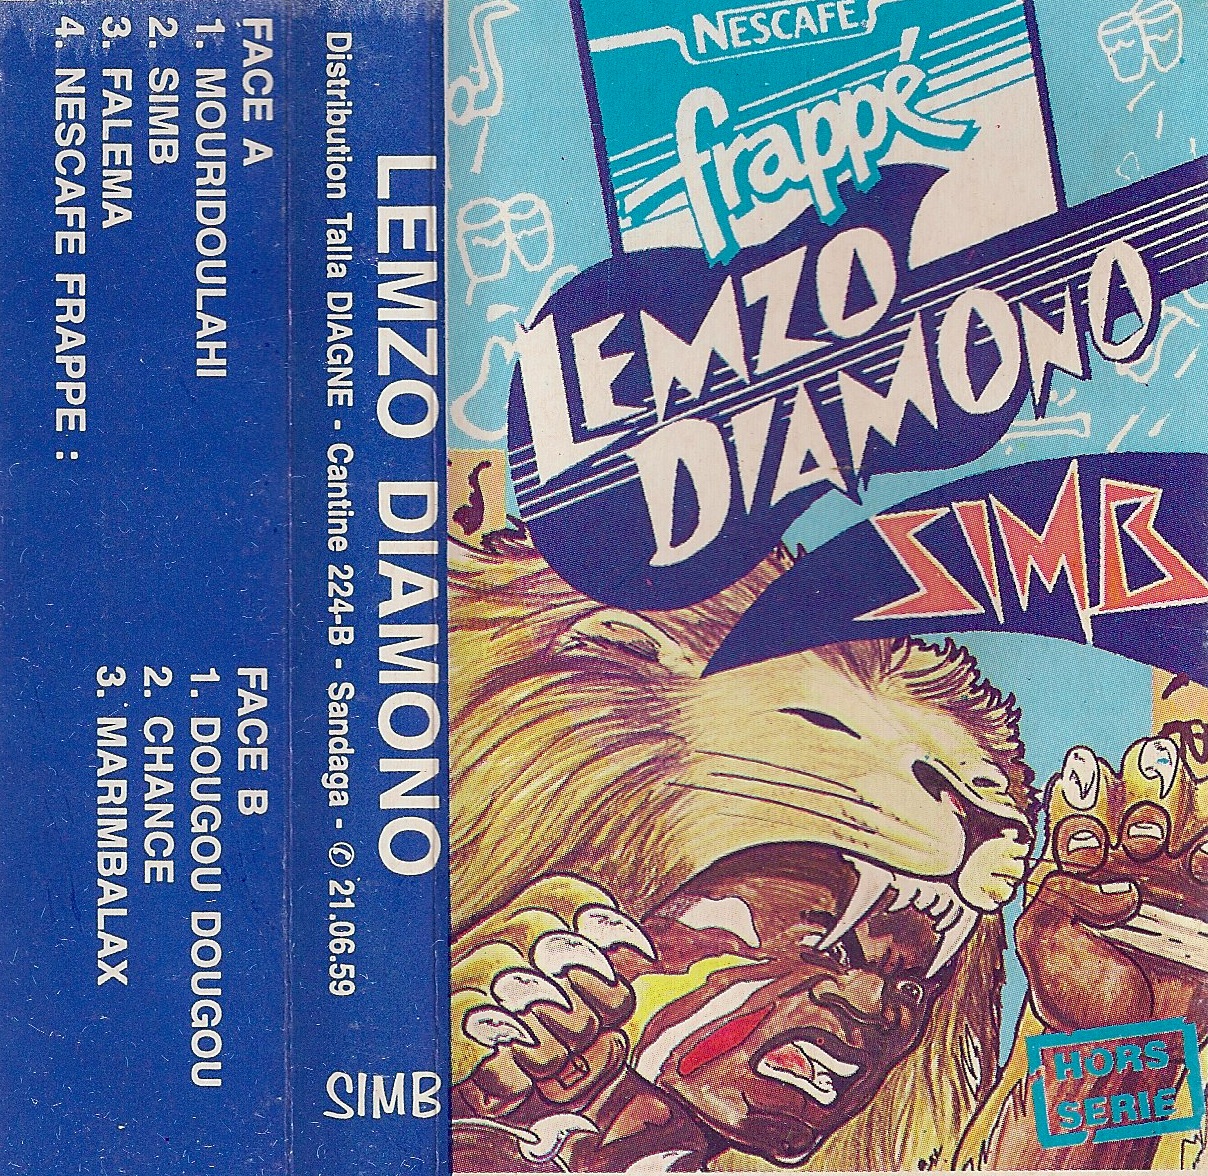 Lemzo Diamono - Simb (Hors Serie) Cover